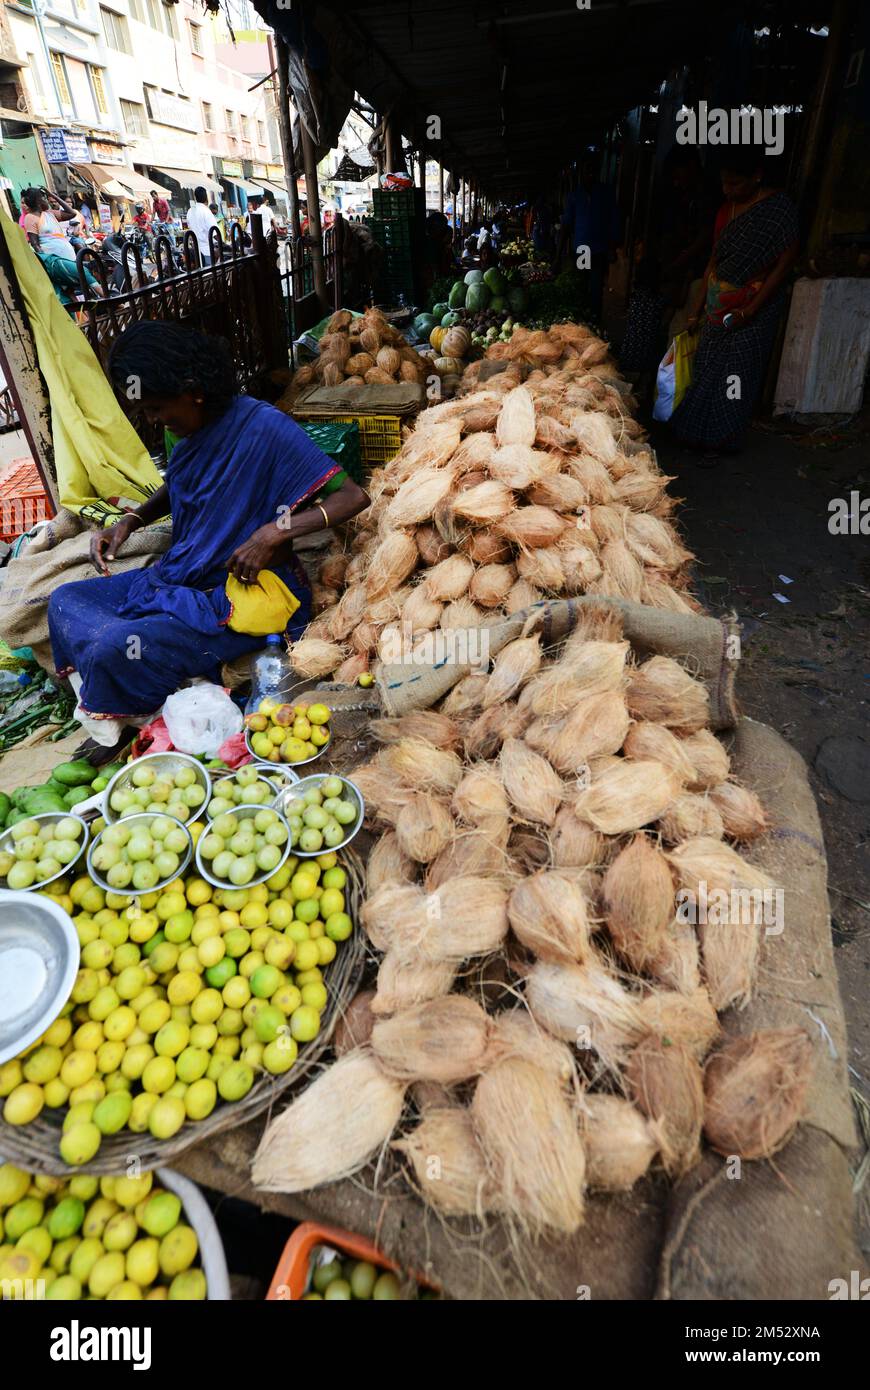 Dried coconuts and bananas sold at a shop at the market in Madurai, Tamil Nadu, India. Stock Photo